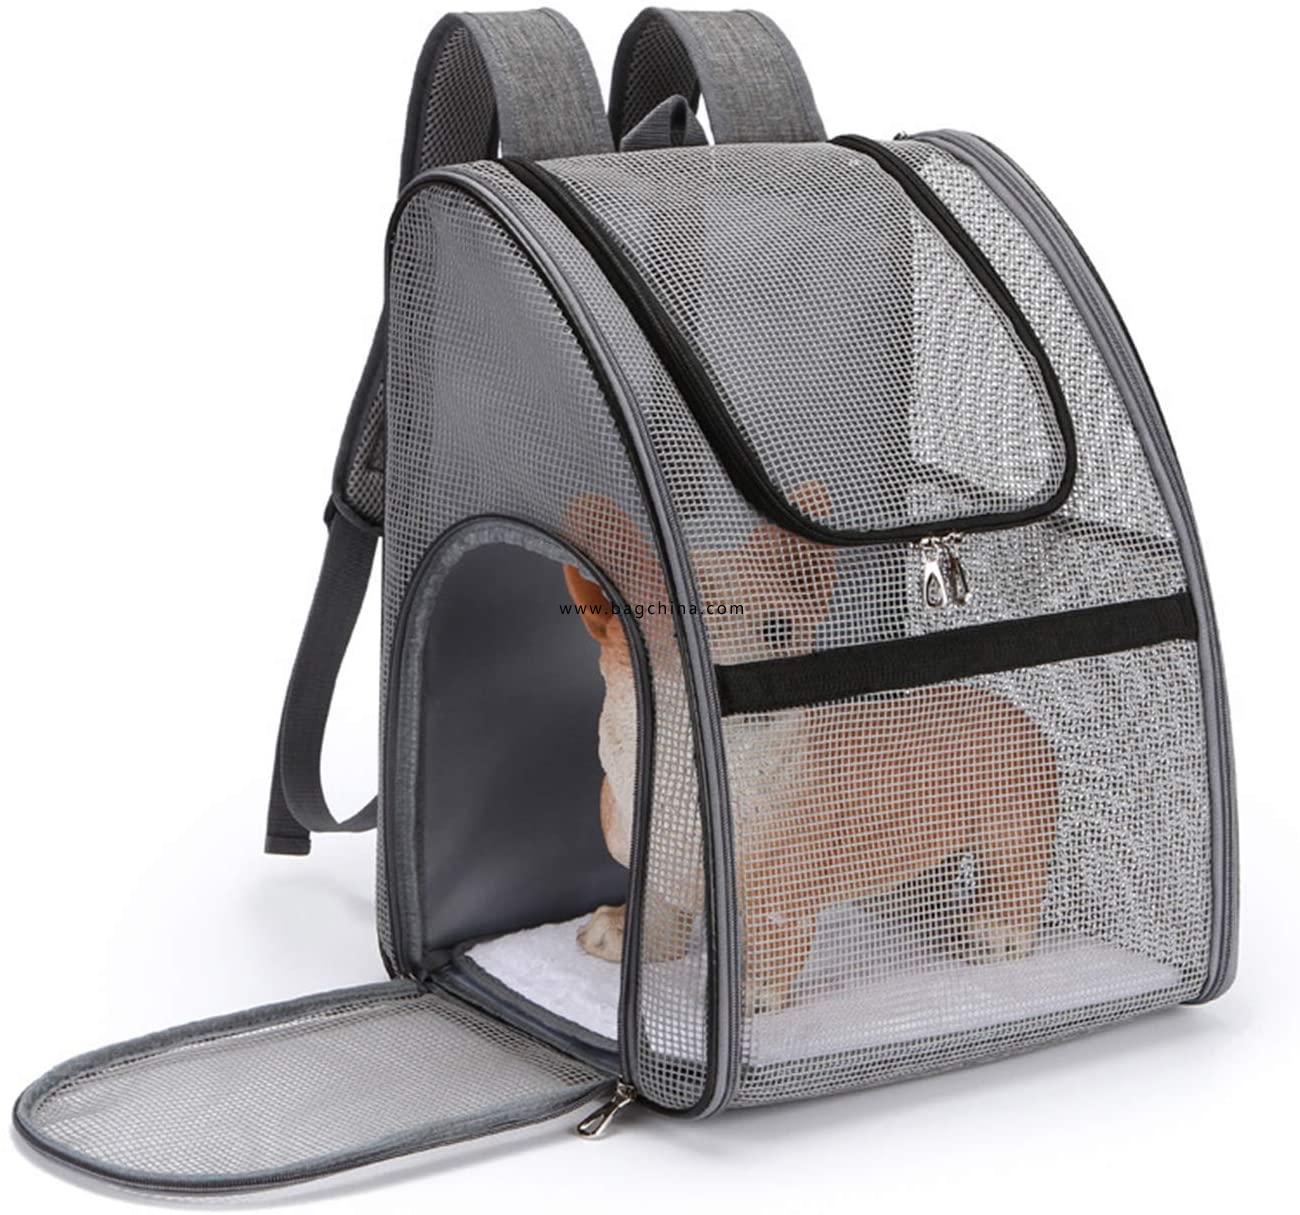 Pet Carrier Bag for Puppy or Kitten